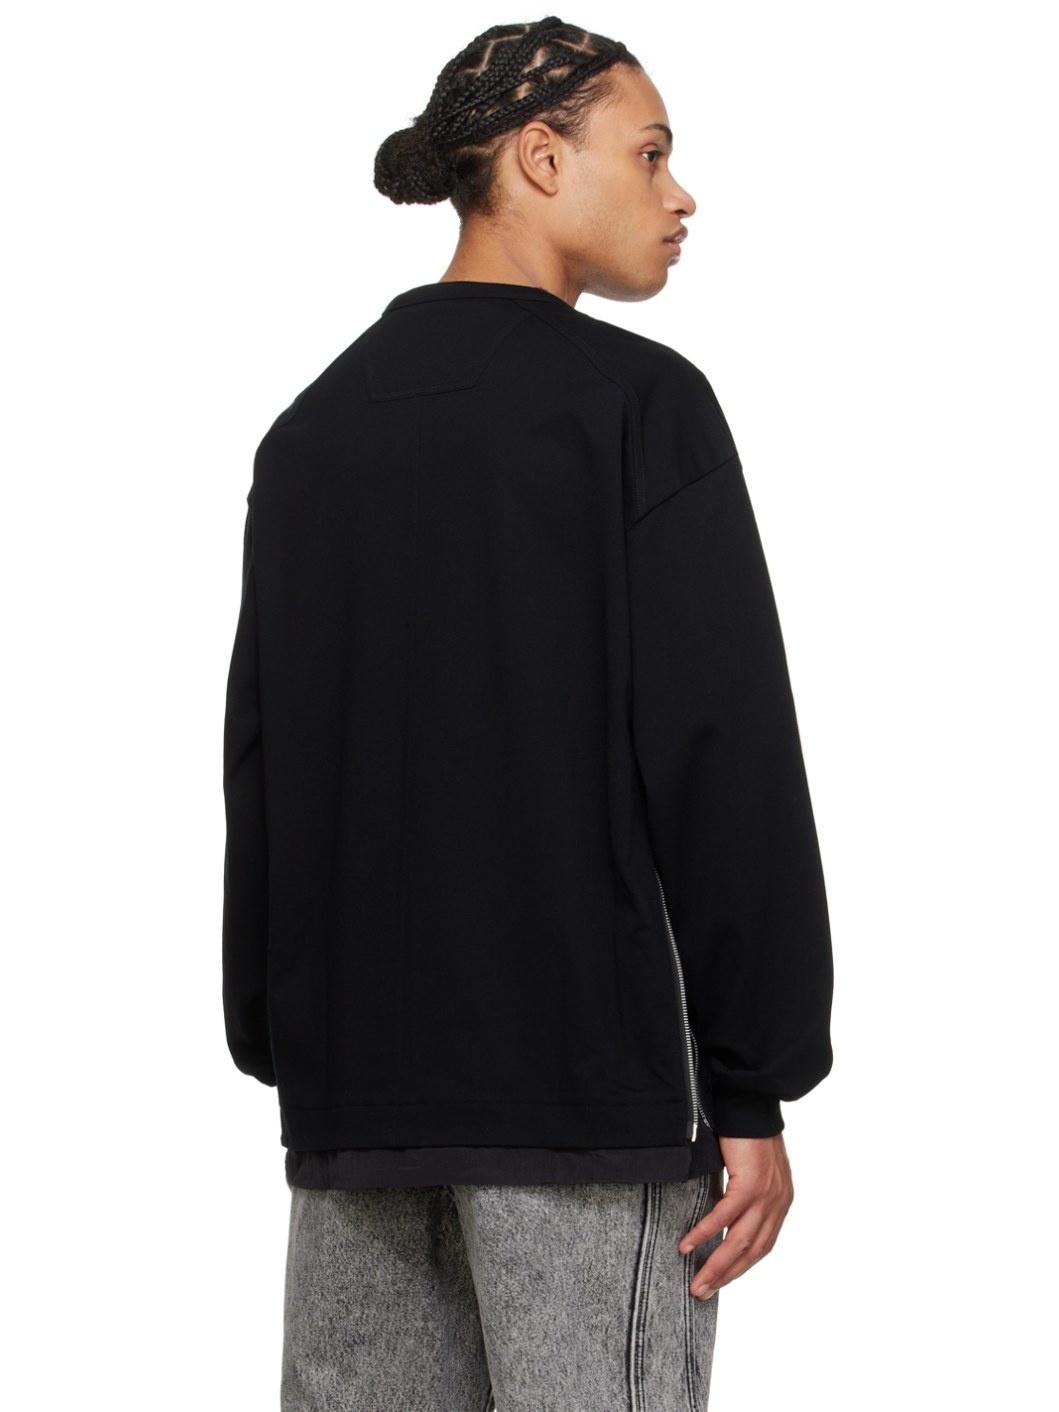 Black Side Zip Sweatshirt - 4